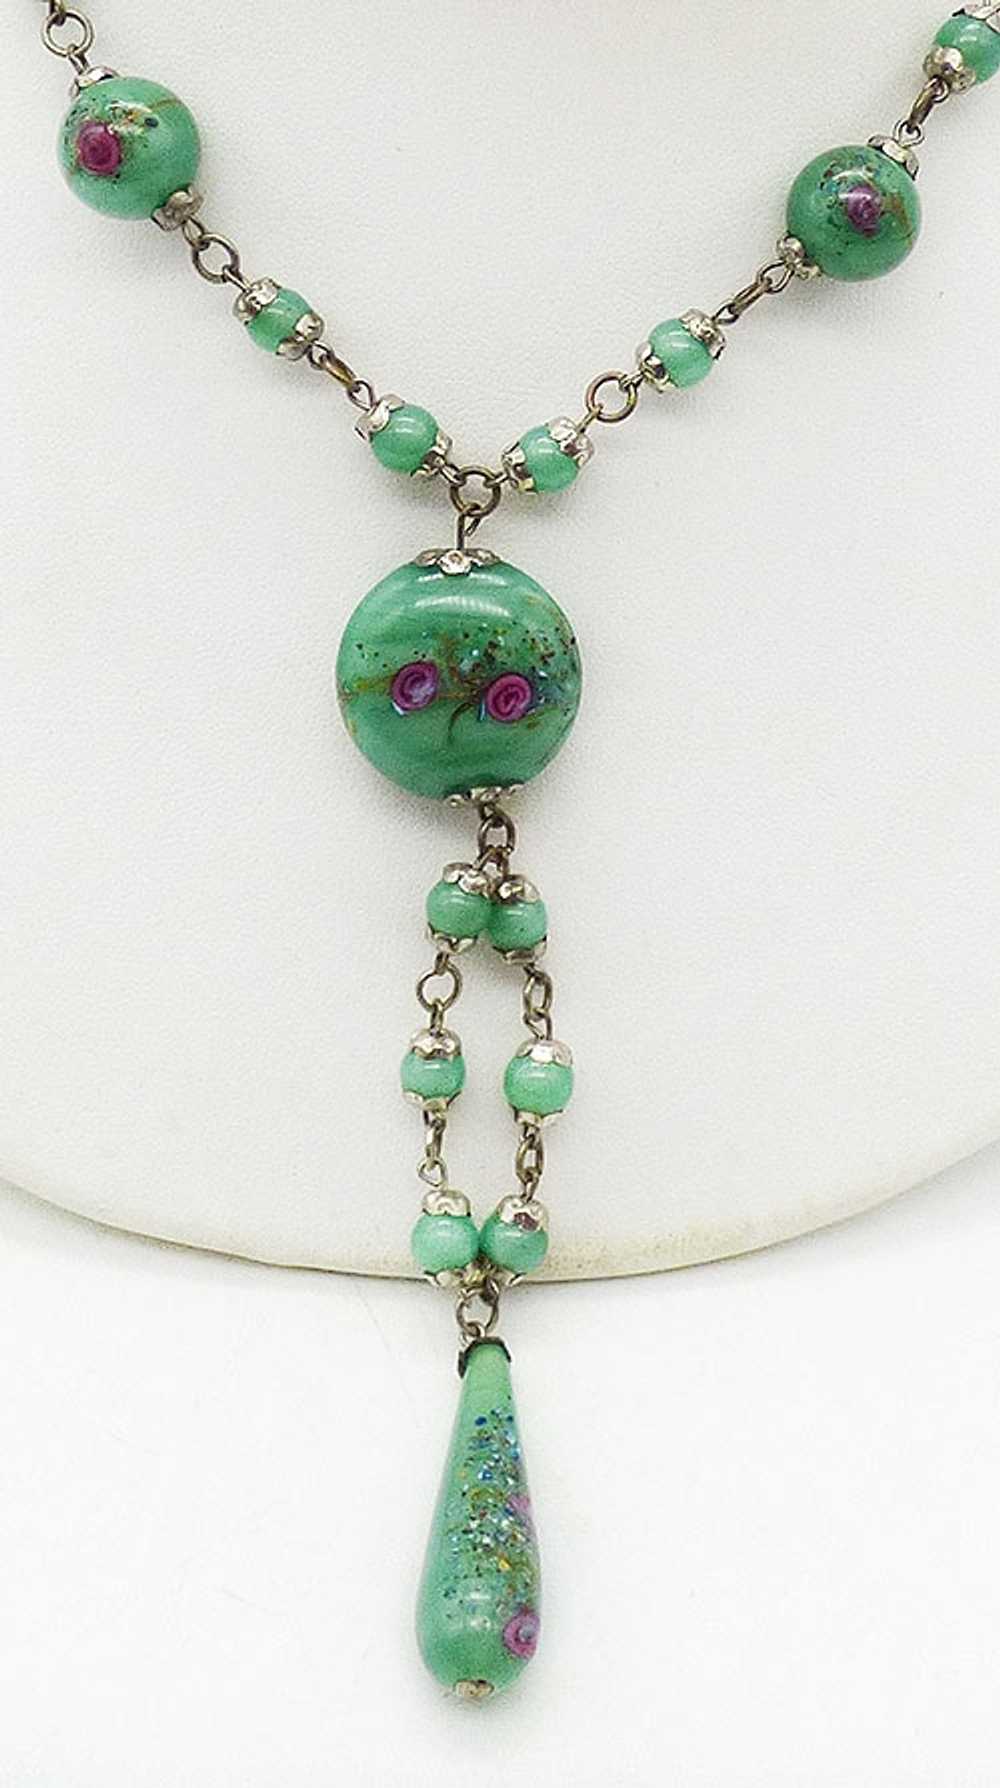 Green Venetian Glass Bead Sautoir Necklace - image 2